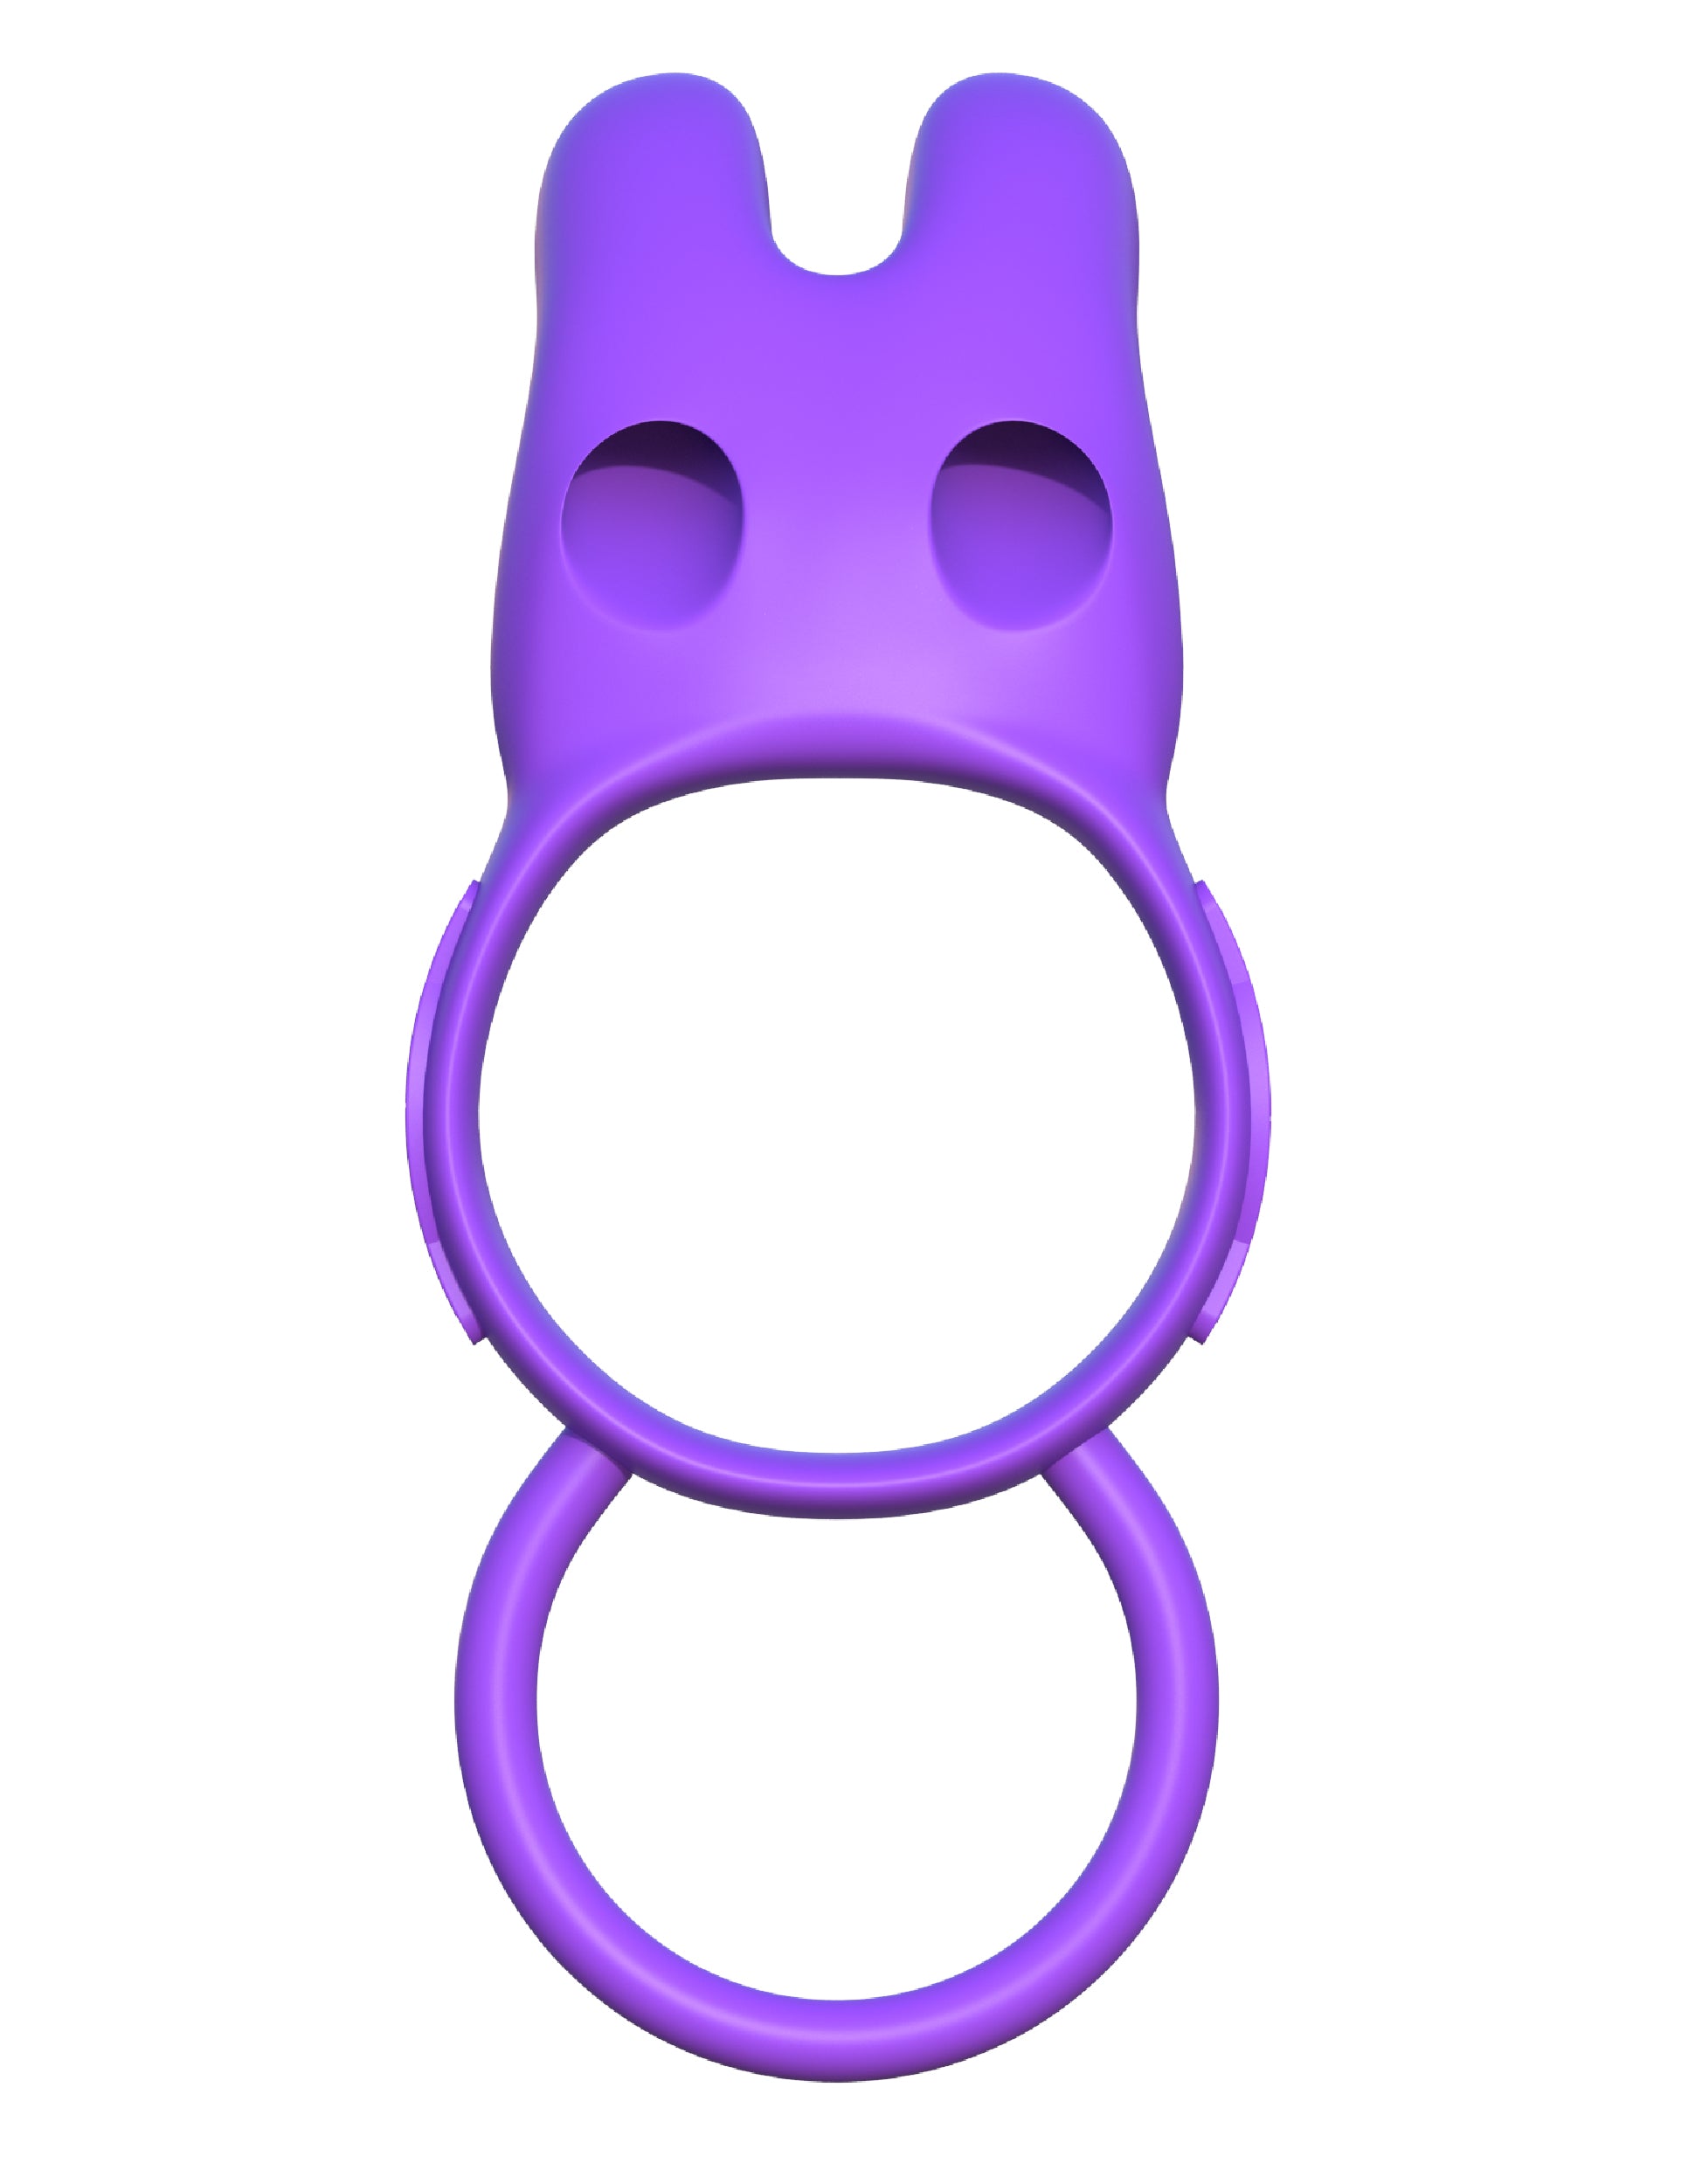 Fantasy C-ringz Twin Teazer Rabbit Ring - Purple